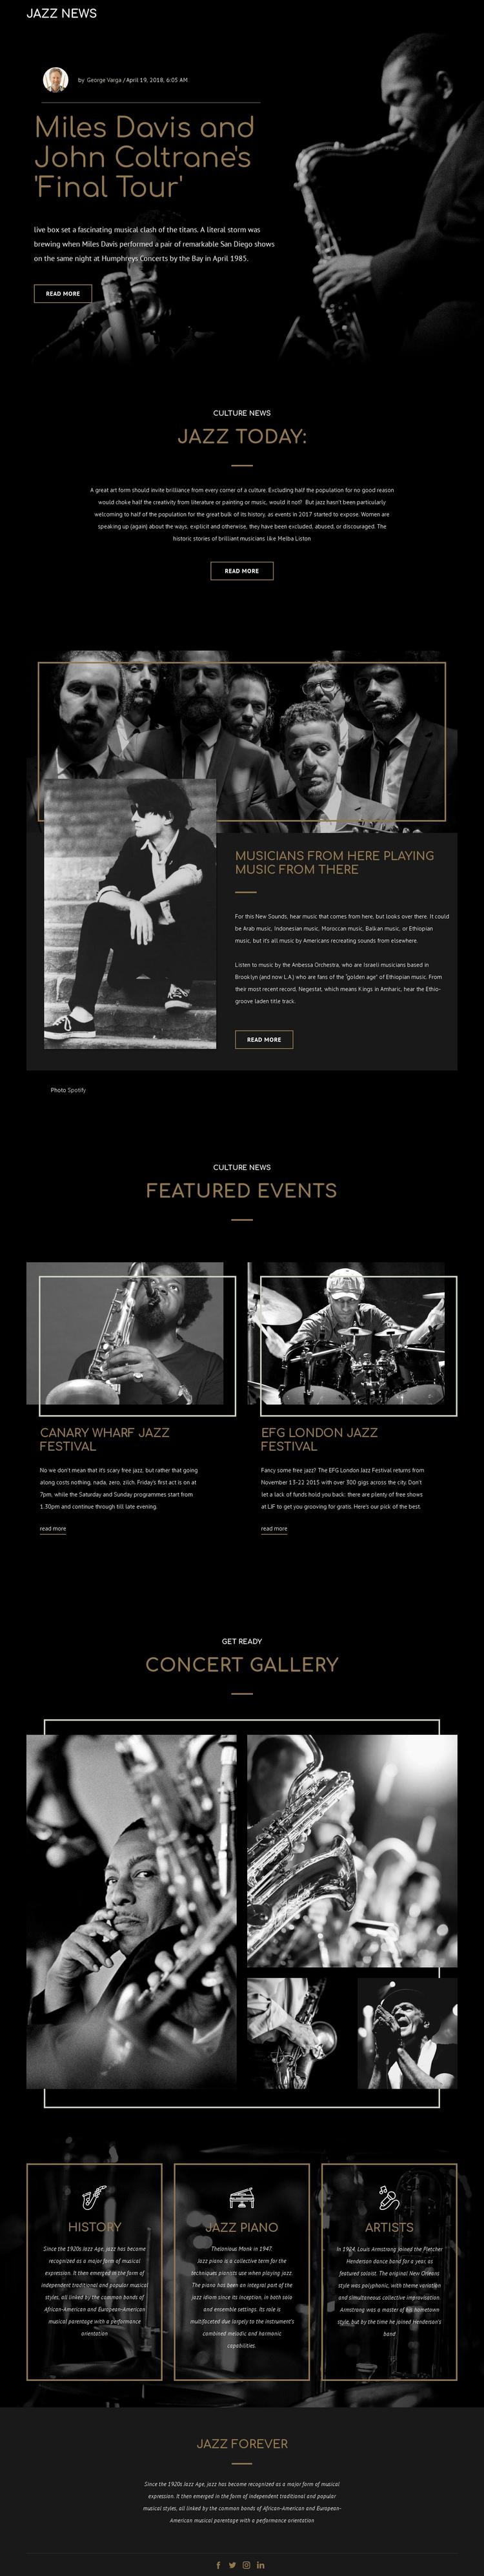 Legengs of jazz music Website Builder Software